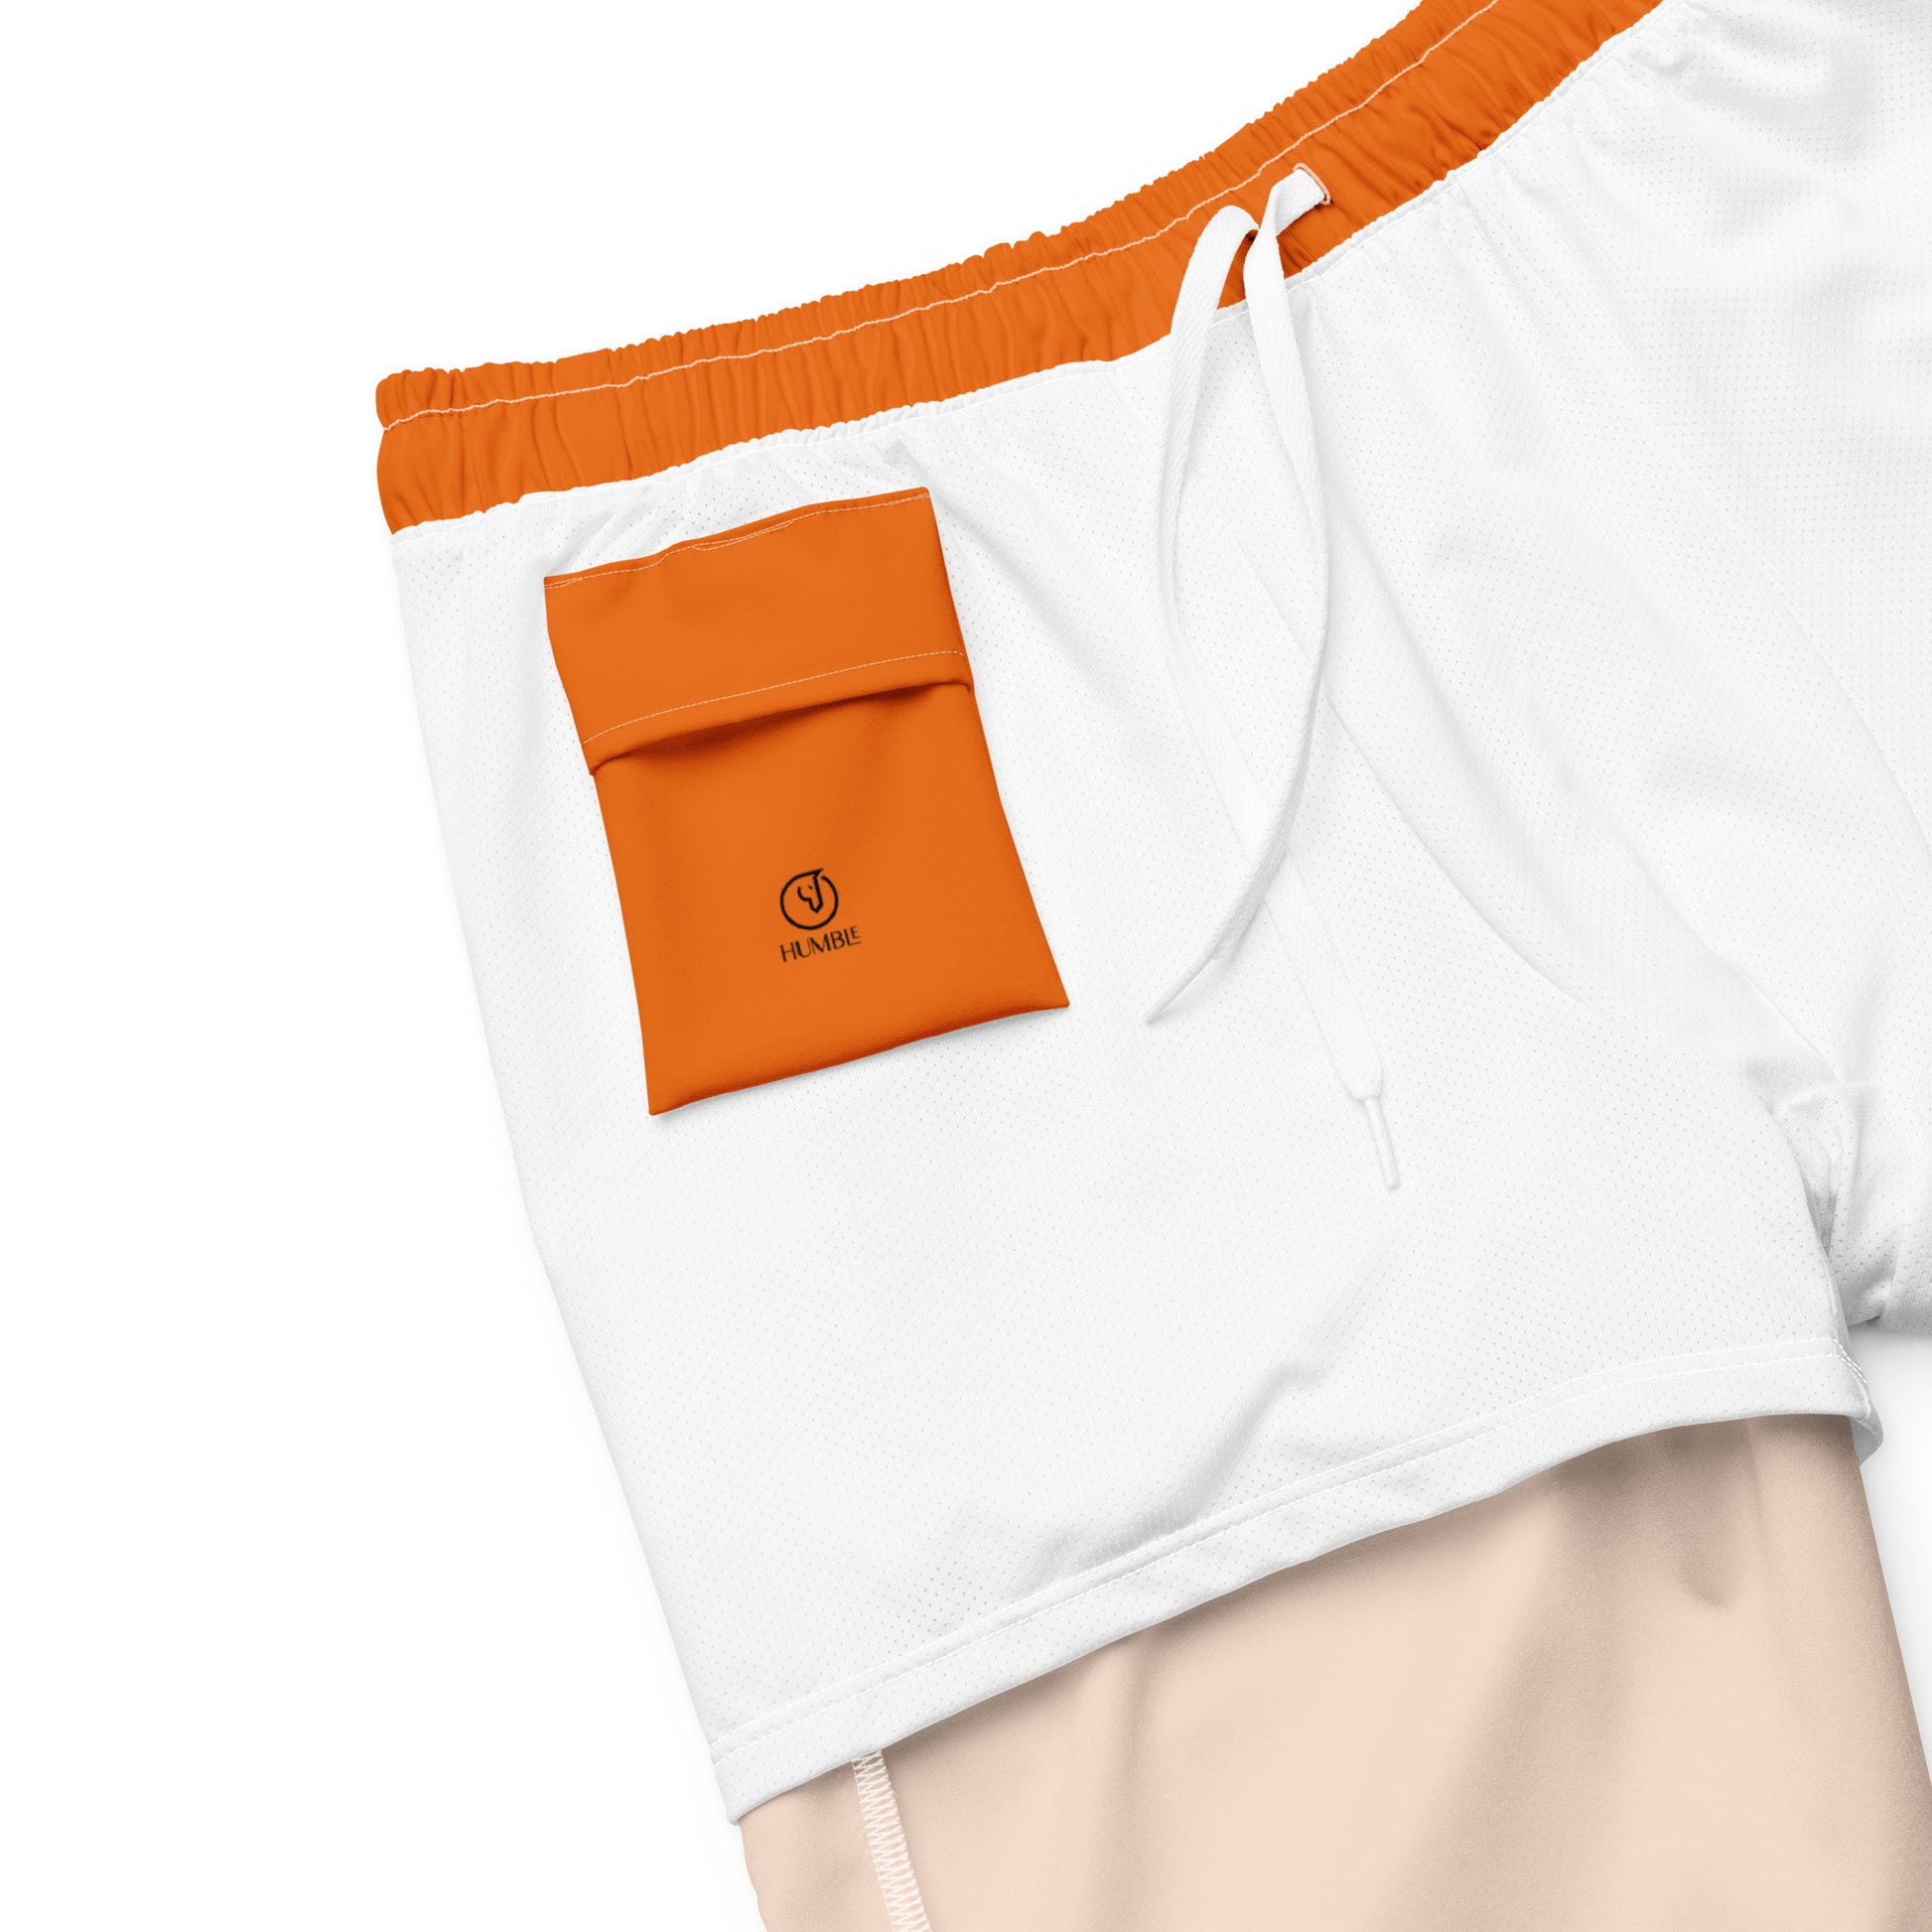 Humble Sportswear, men's Color Match eco-friendly moisture-wicking swim trunks 